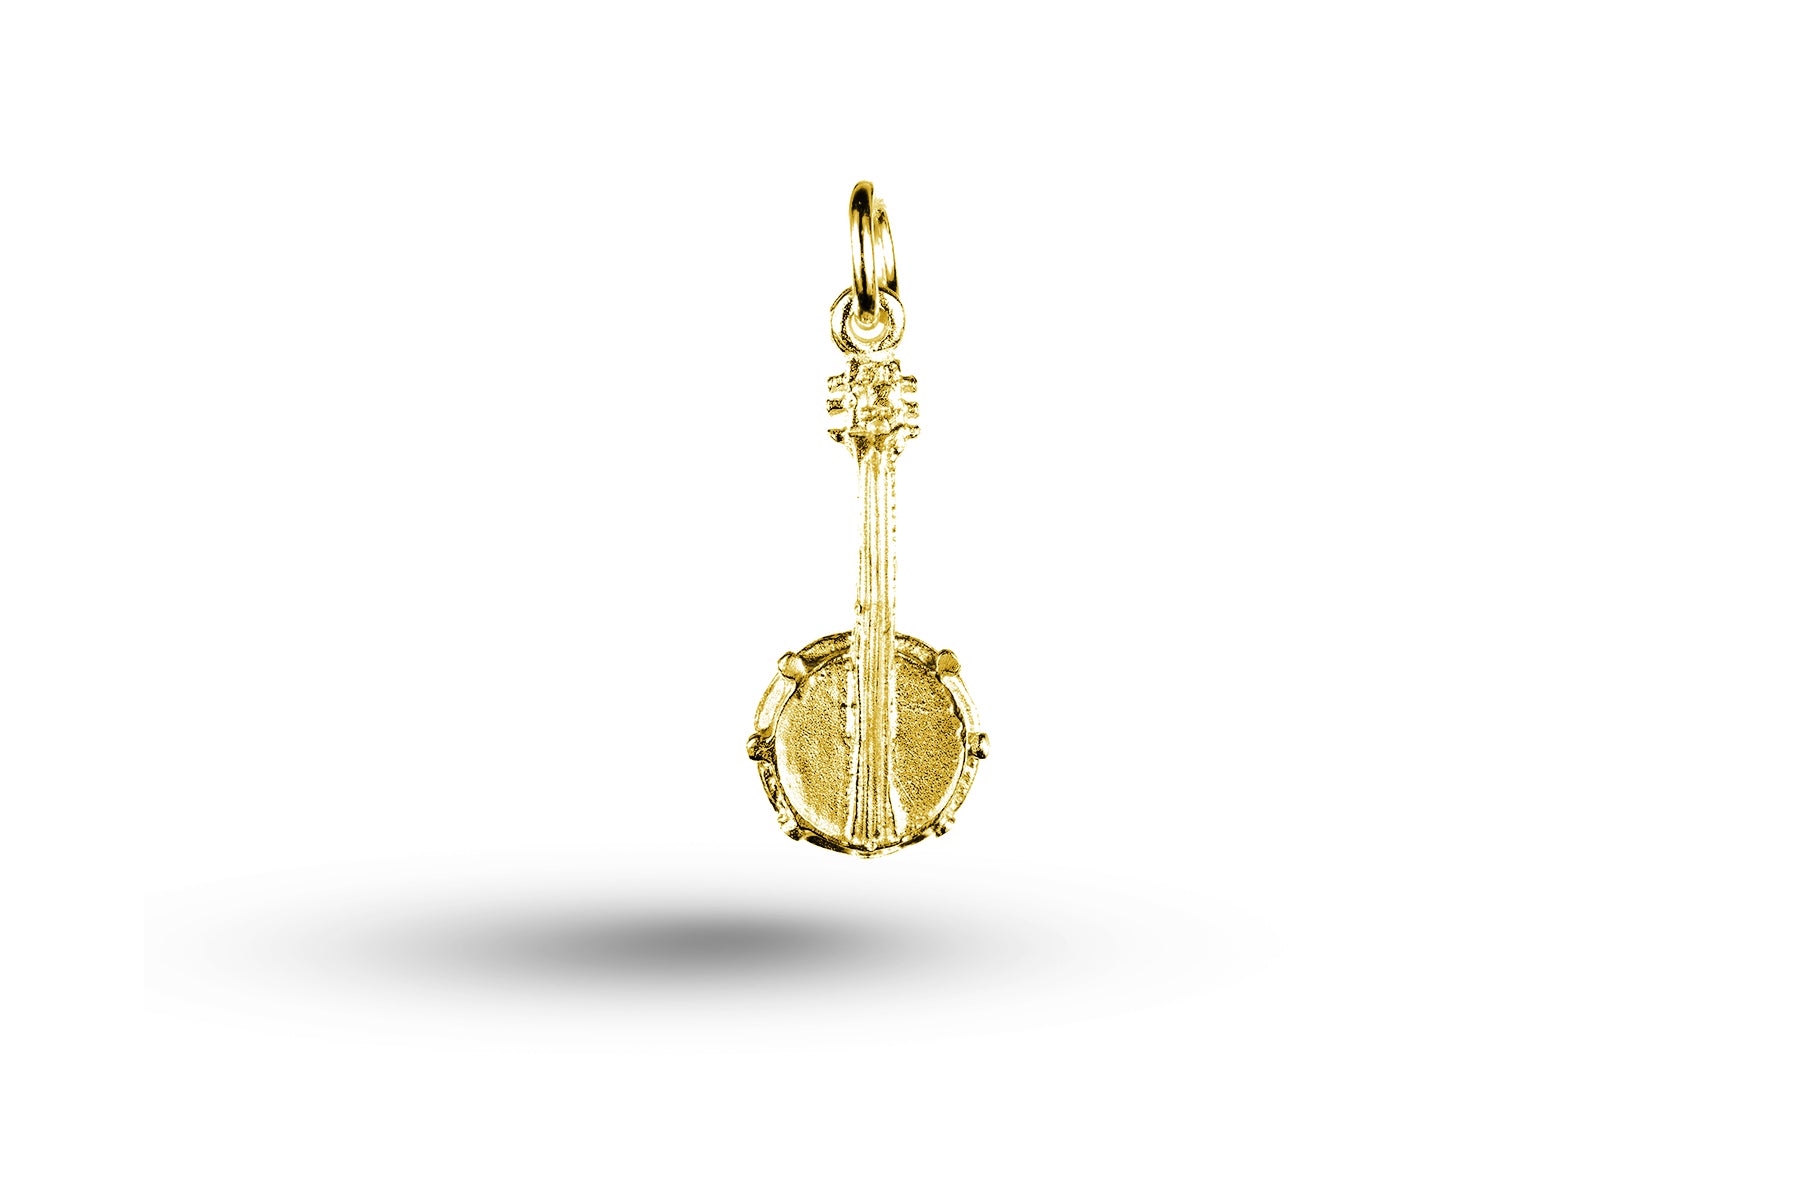 Luxury yellow gold banjo charm.